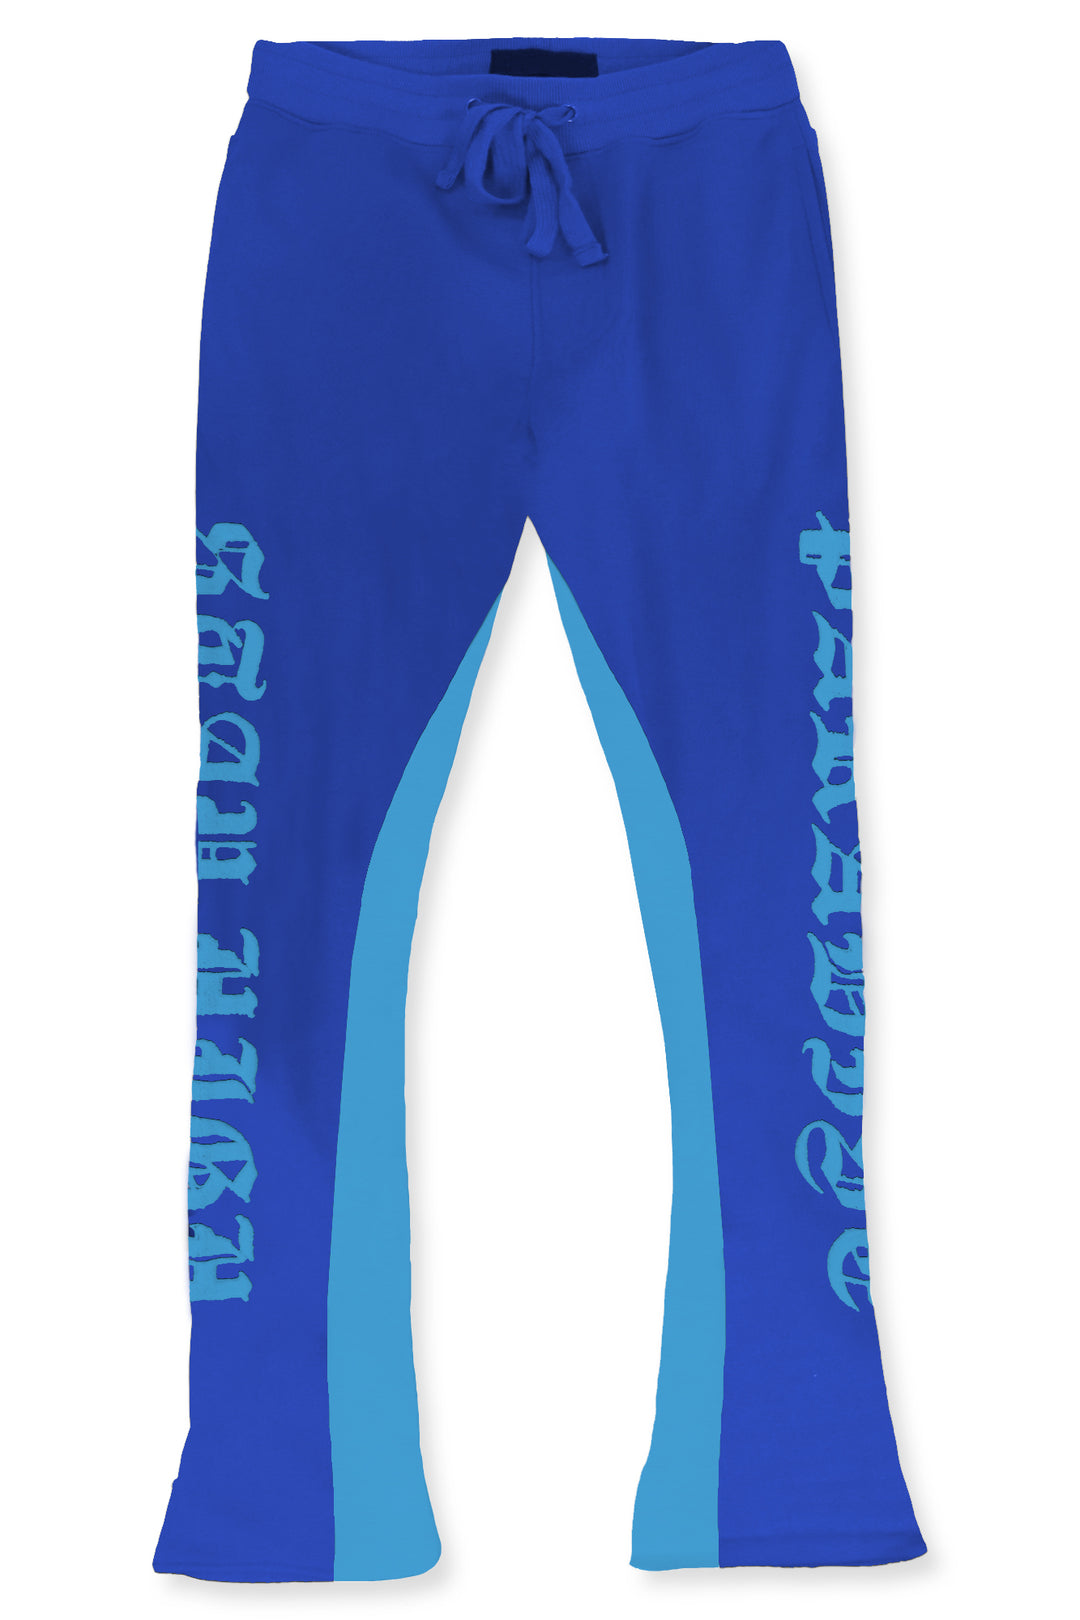 Stay High Paradise Fleece Stacked Pant (Royal Blue) (132-498) - Zamage